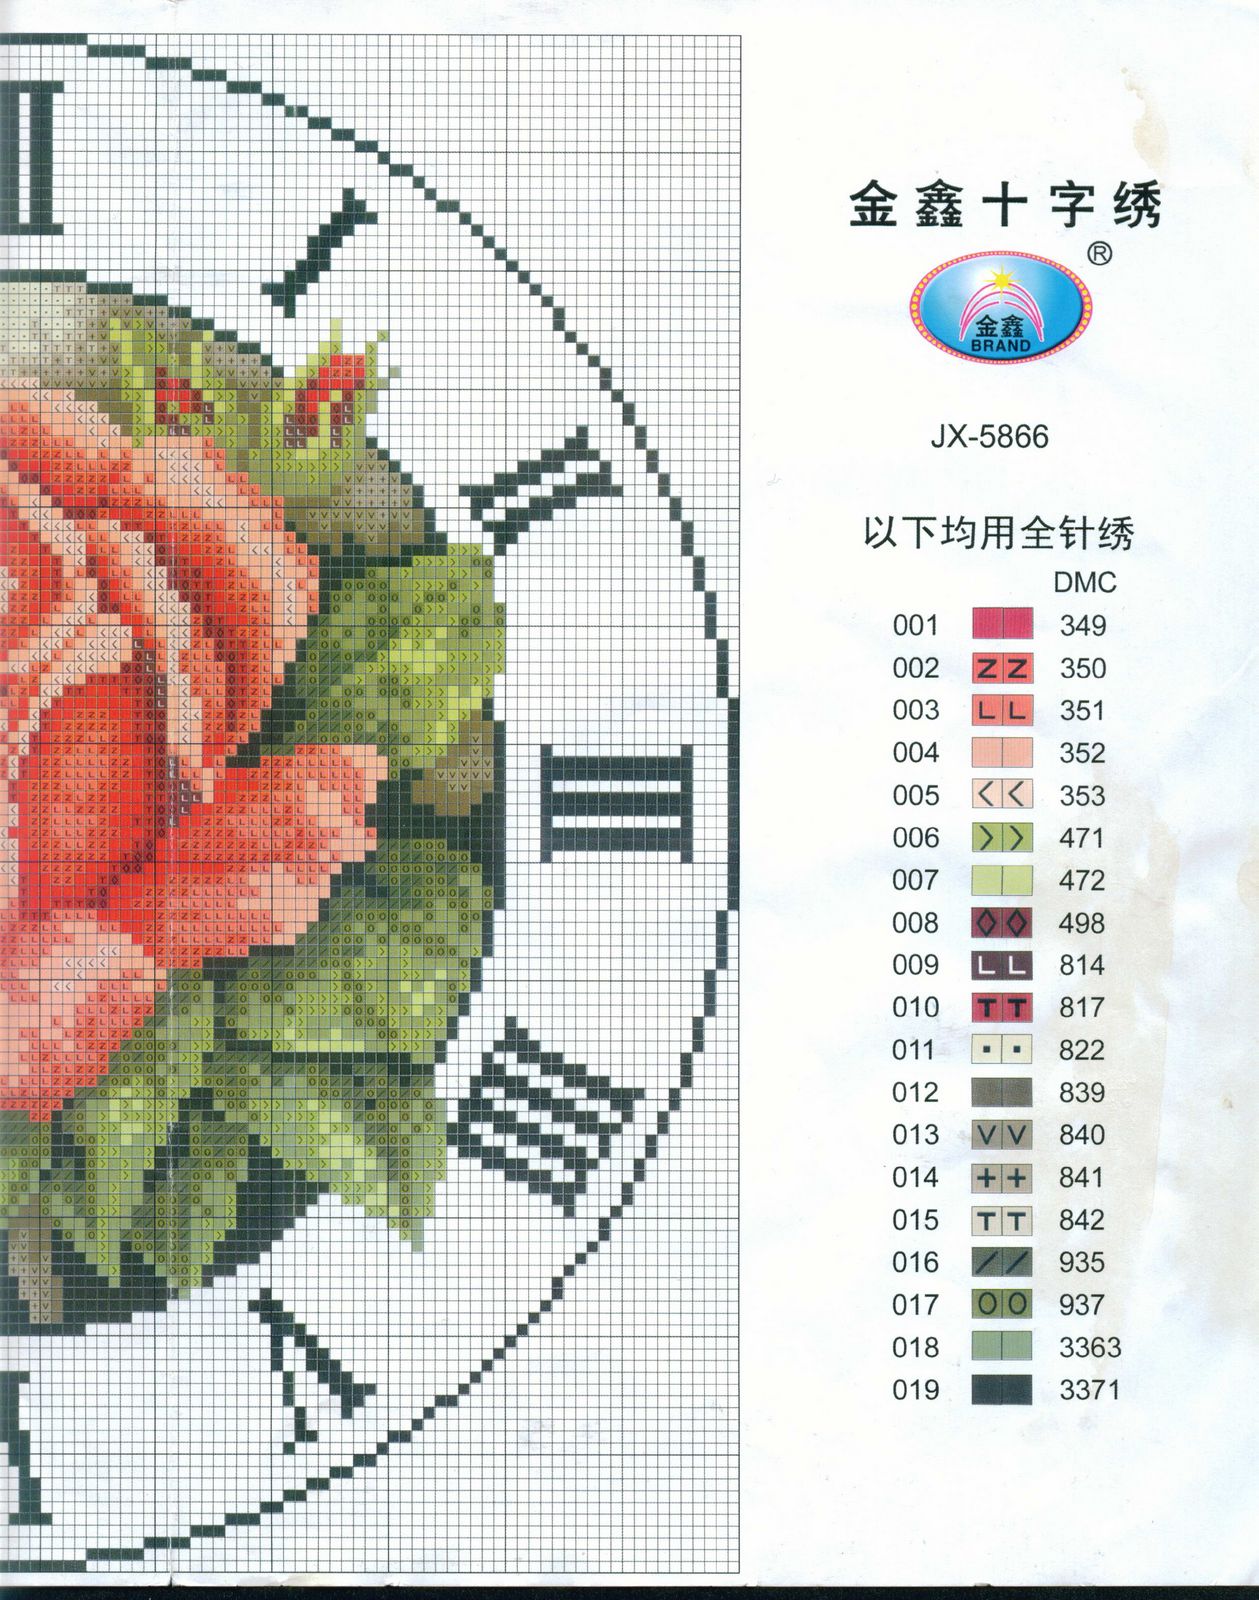 clock round red roses cross stitch (2)